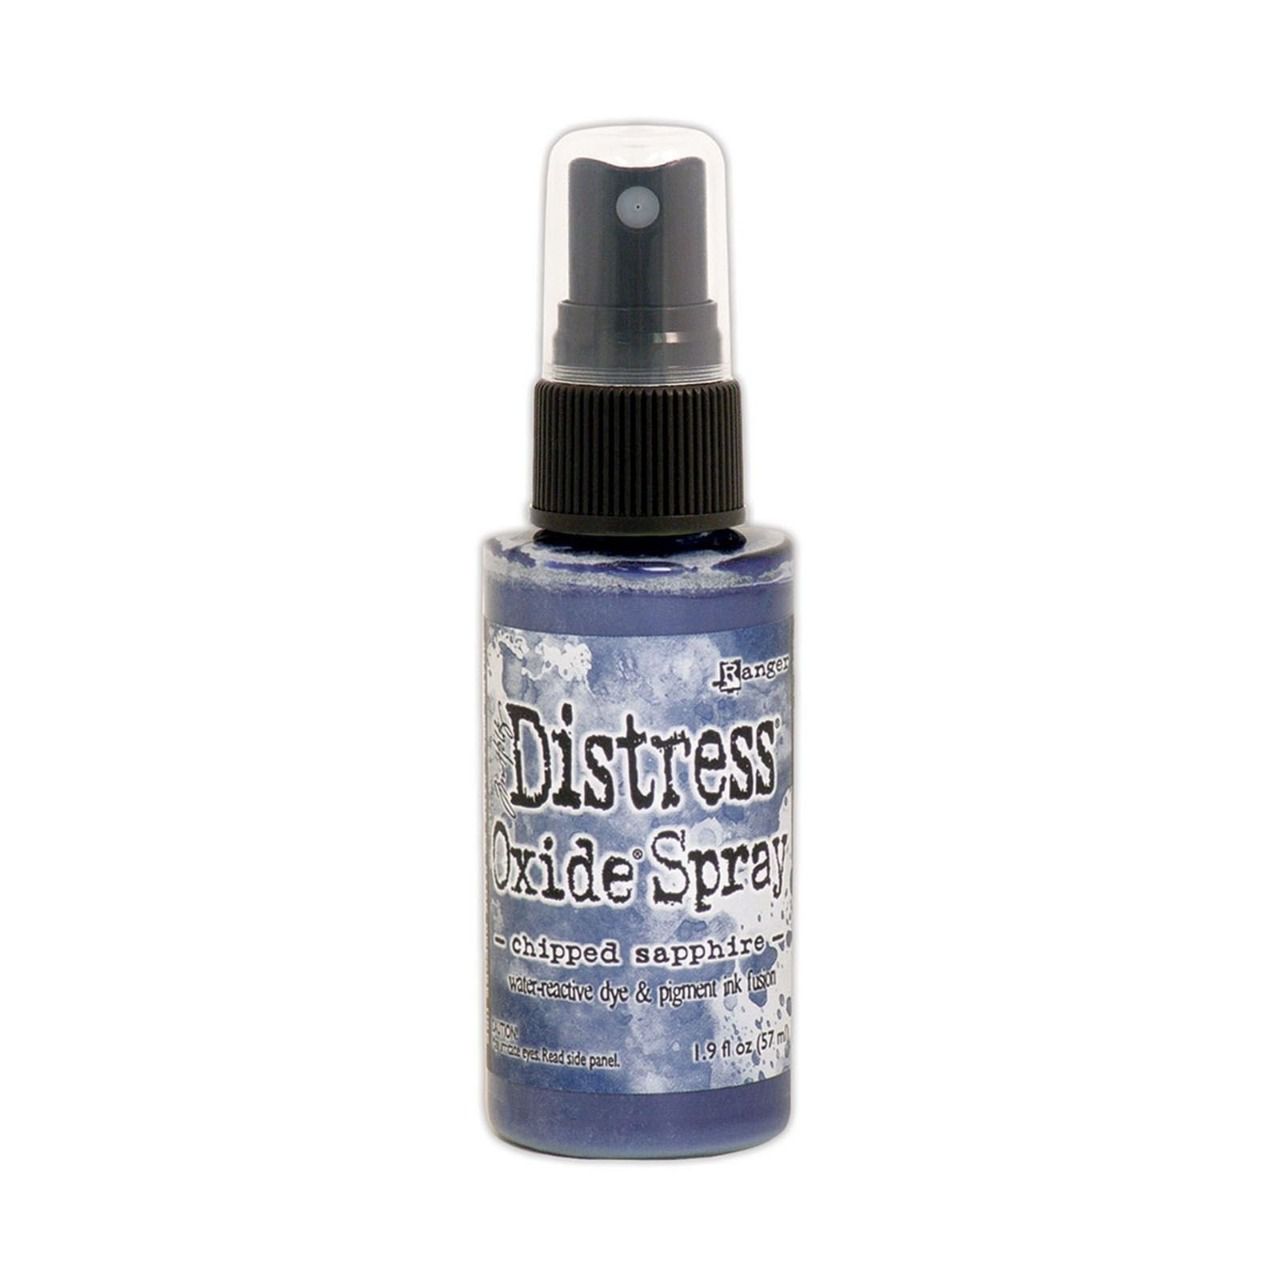 Distress spray oxide : Chipped sapphire